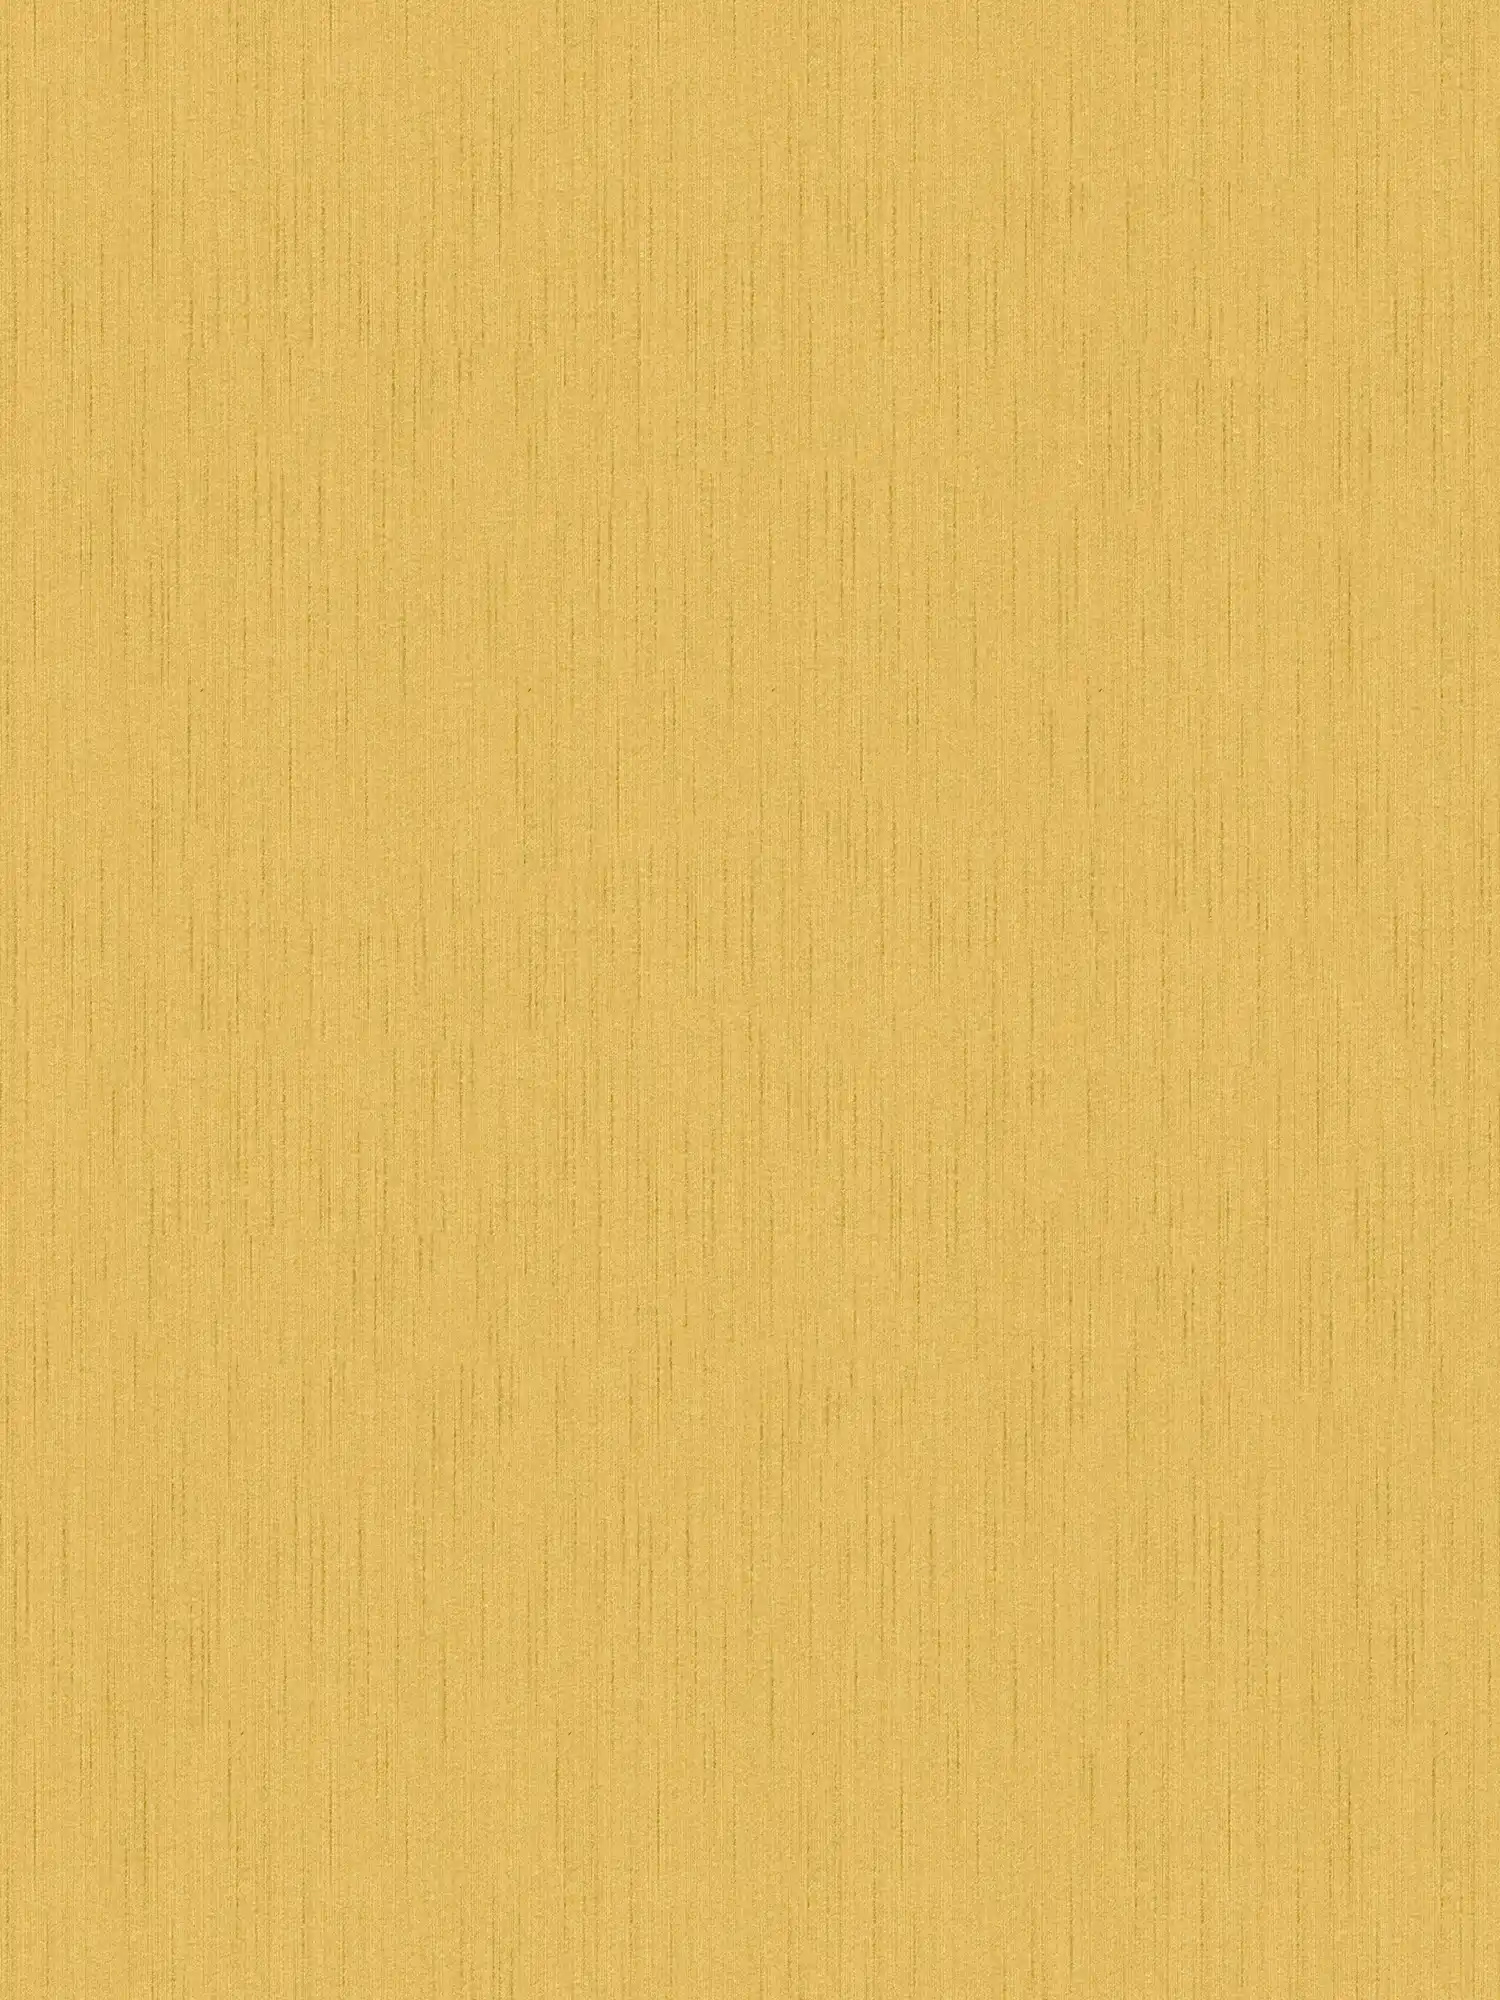 Carta da parati giallo senape in tessuto non tessuto con motivo a chiazze - giallo
